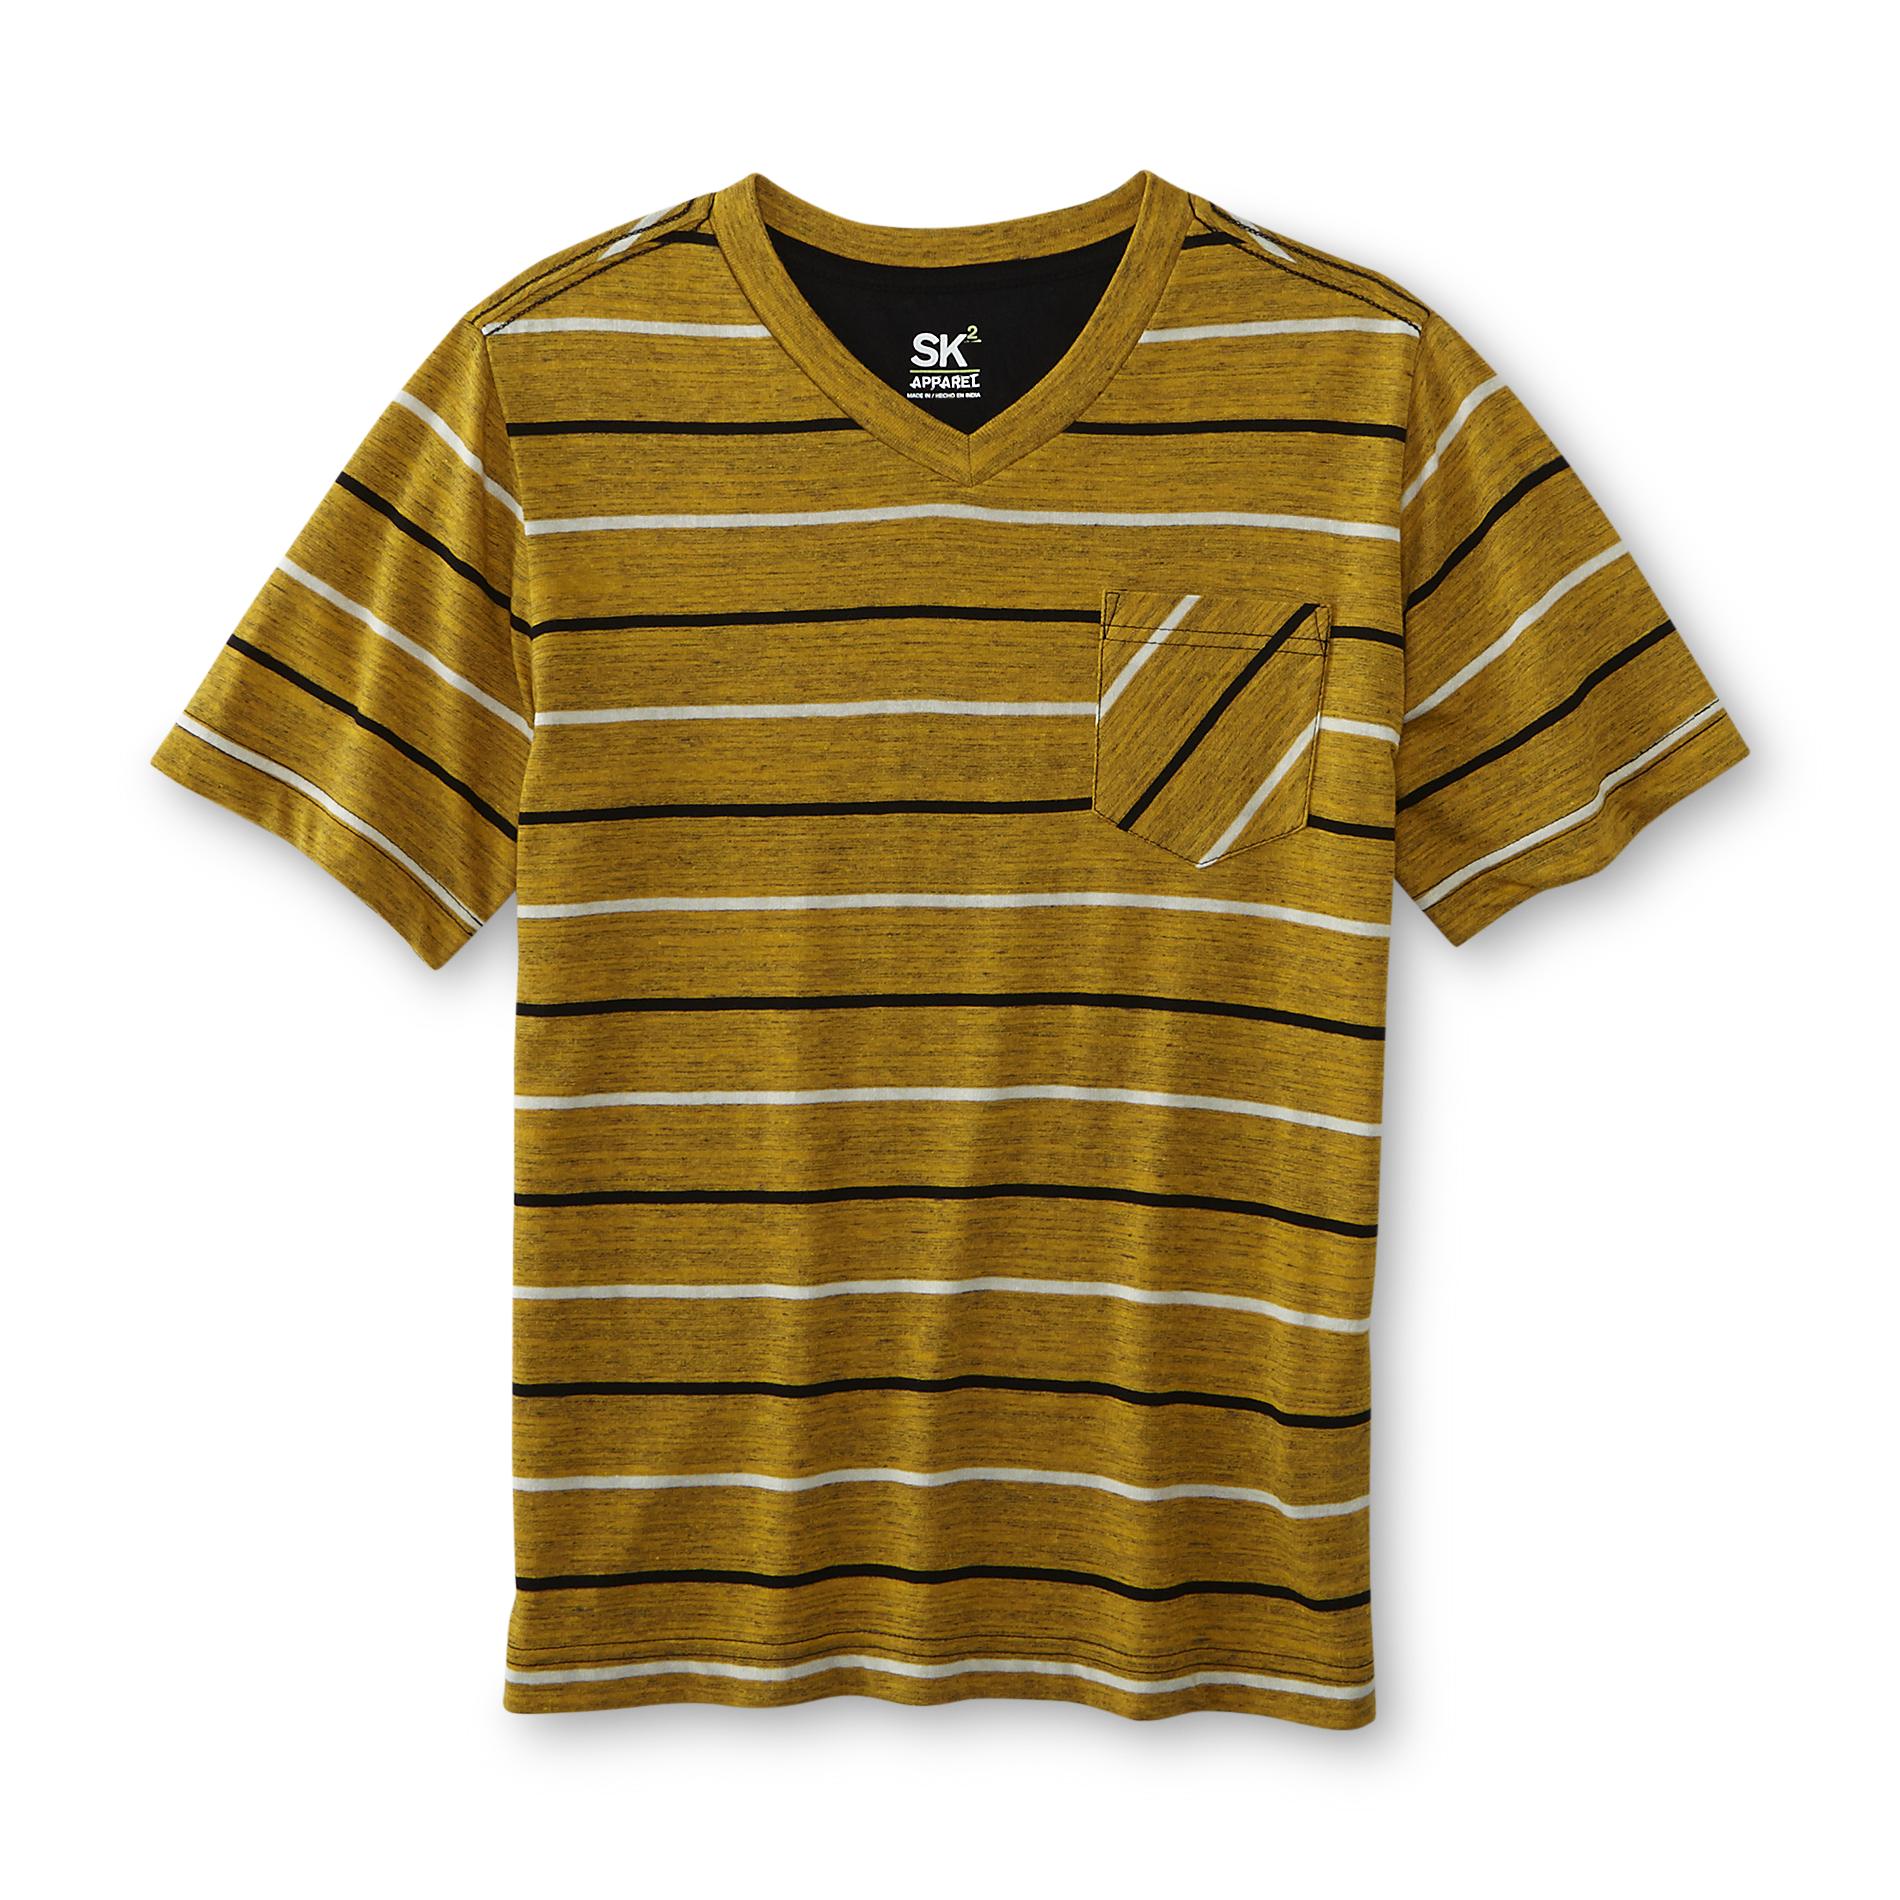 SK2 Boy's V-Neck Shirt - Striped